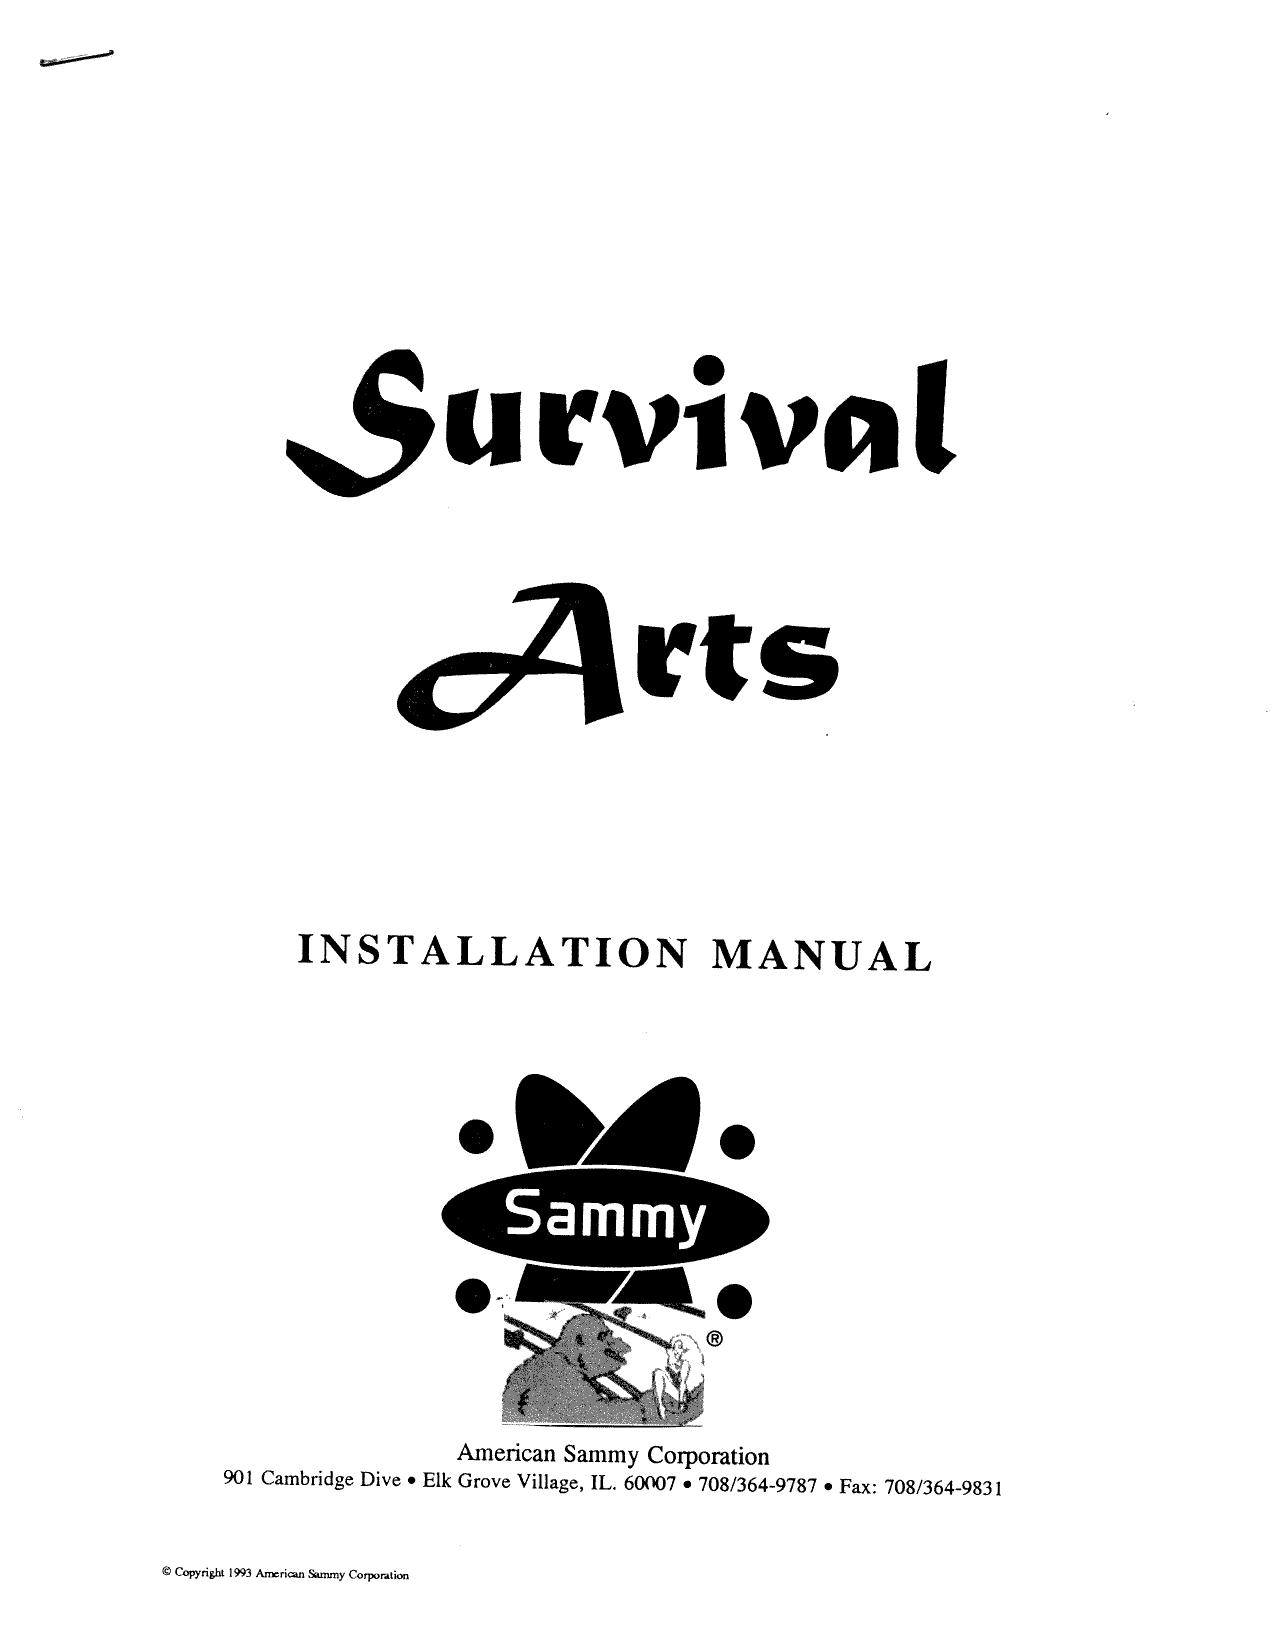 SurvivalArts Manual